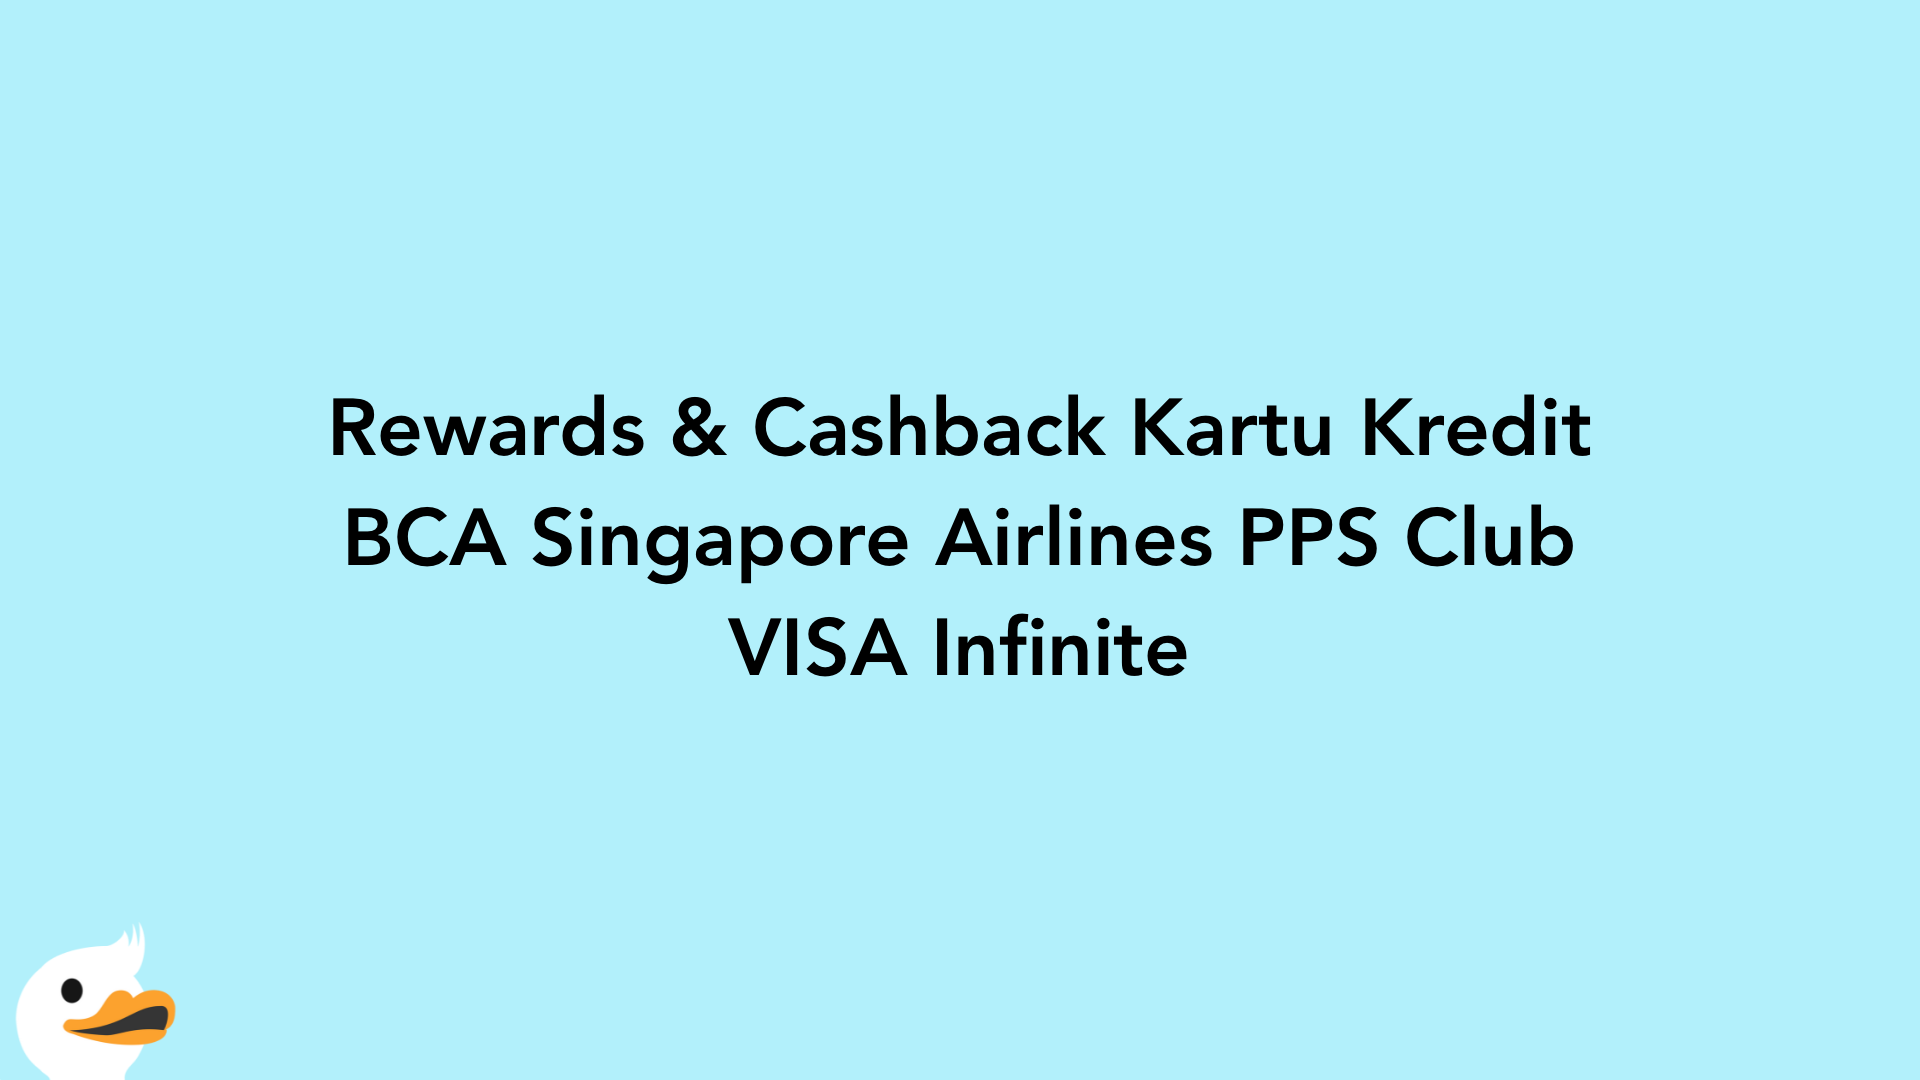 Rewards & Cashback Kartu Kredit BCA Singapore Airlines PPS Club VISA Infinite